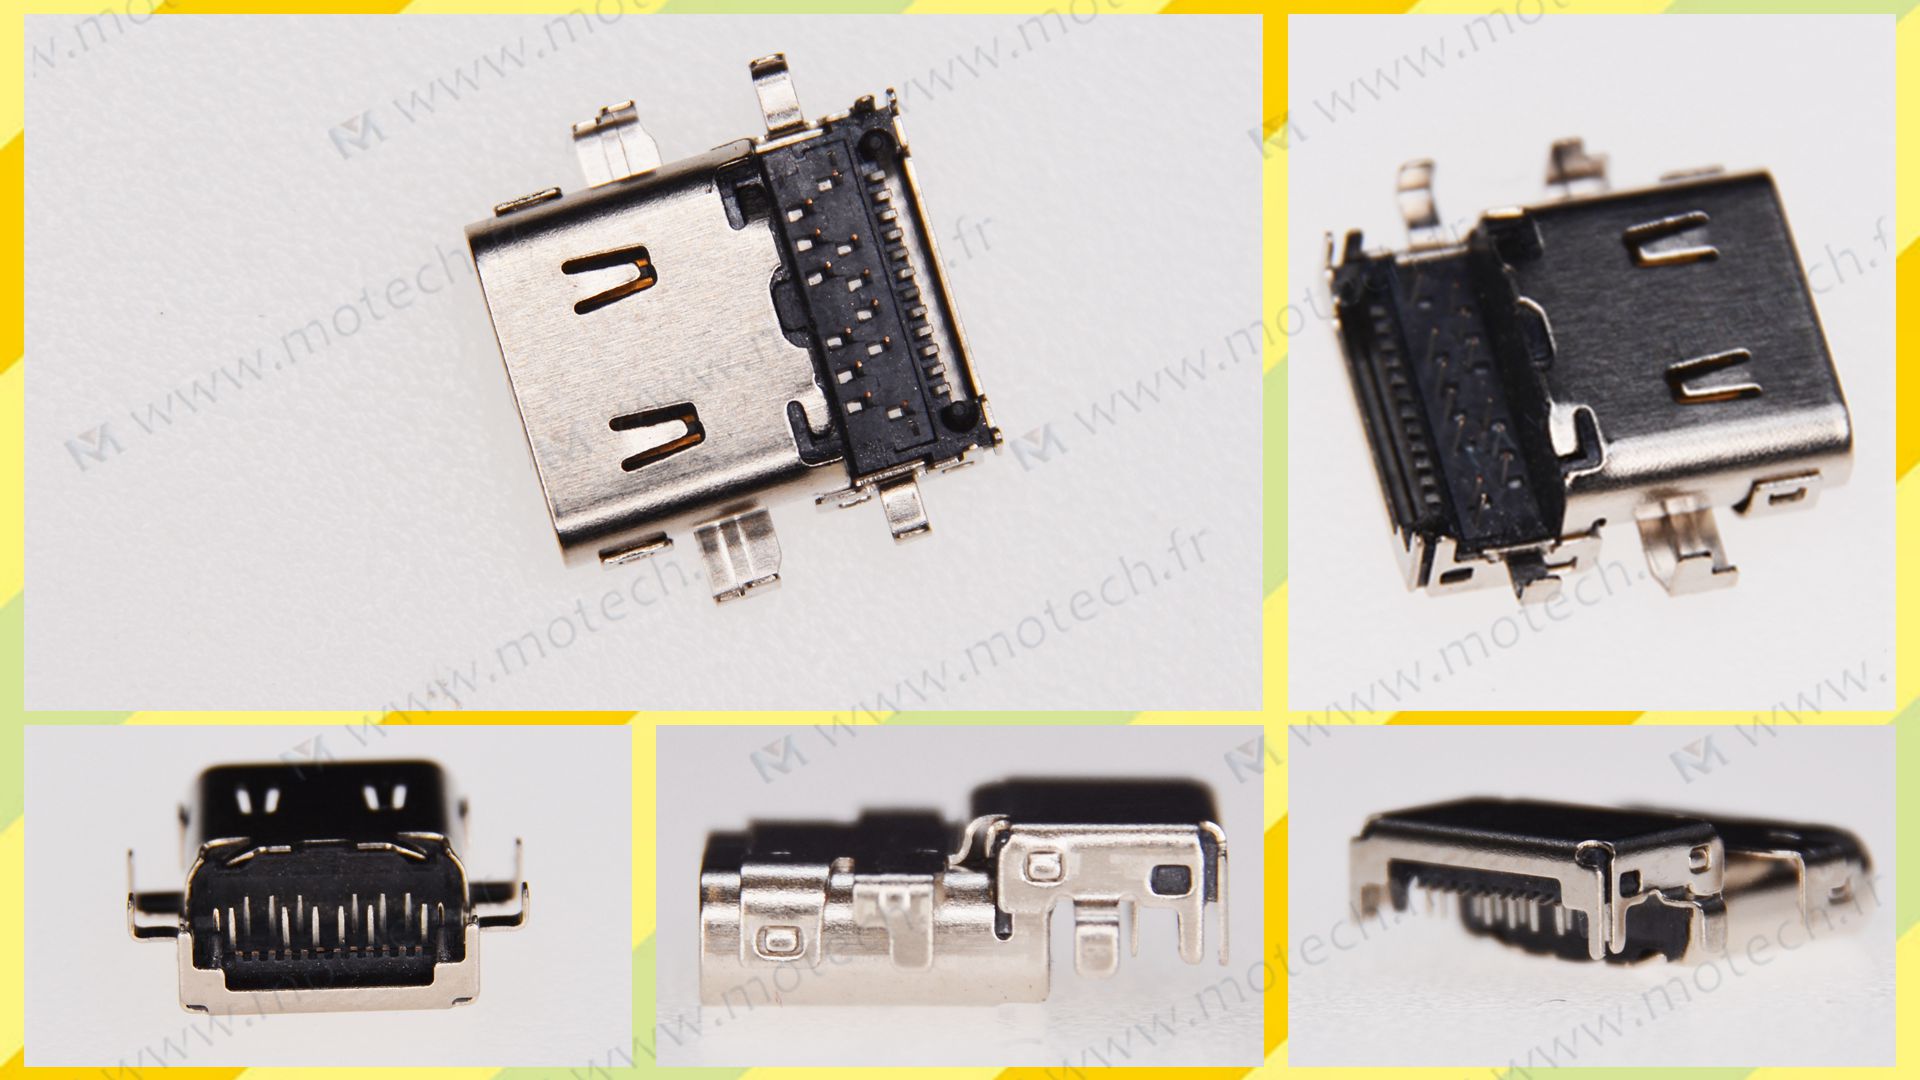  HP 15-bl075nr USB Type C, HP 15-bl075nr Port USB à souder, HP 15-bl075nr charging card, HP 15-bl075nr USB port for welding, HP 15-bl075nr charging port, HP 15-bl075nr charging connector, HP 15-bl075nr DC Power Jack, Socket Plug Port HP 15-bl075nr, Power jack HP 15-bl075nr, 